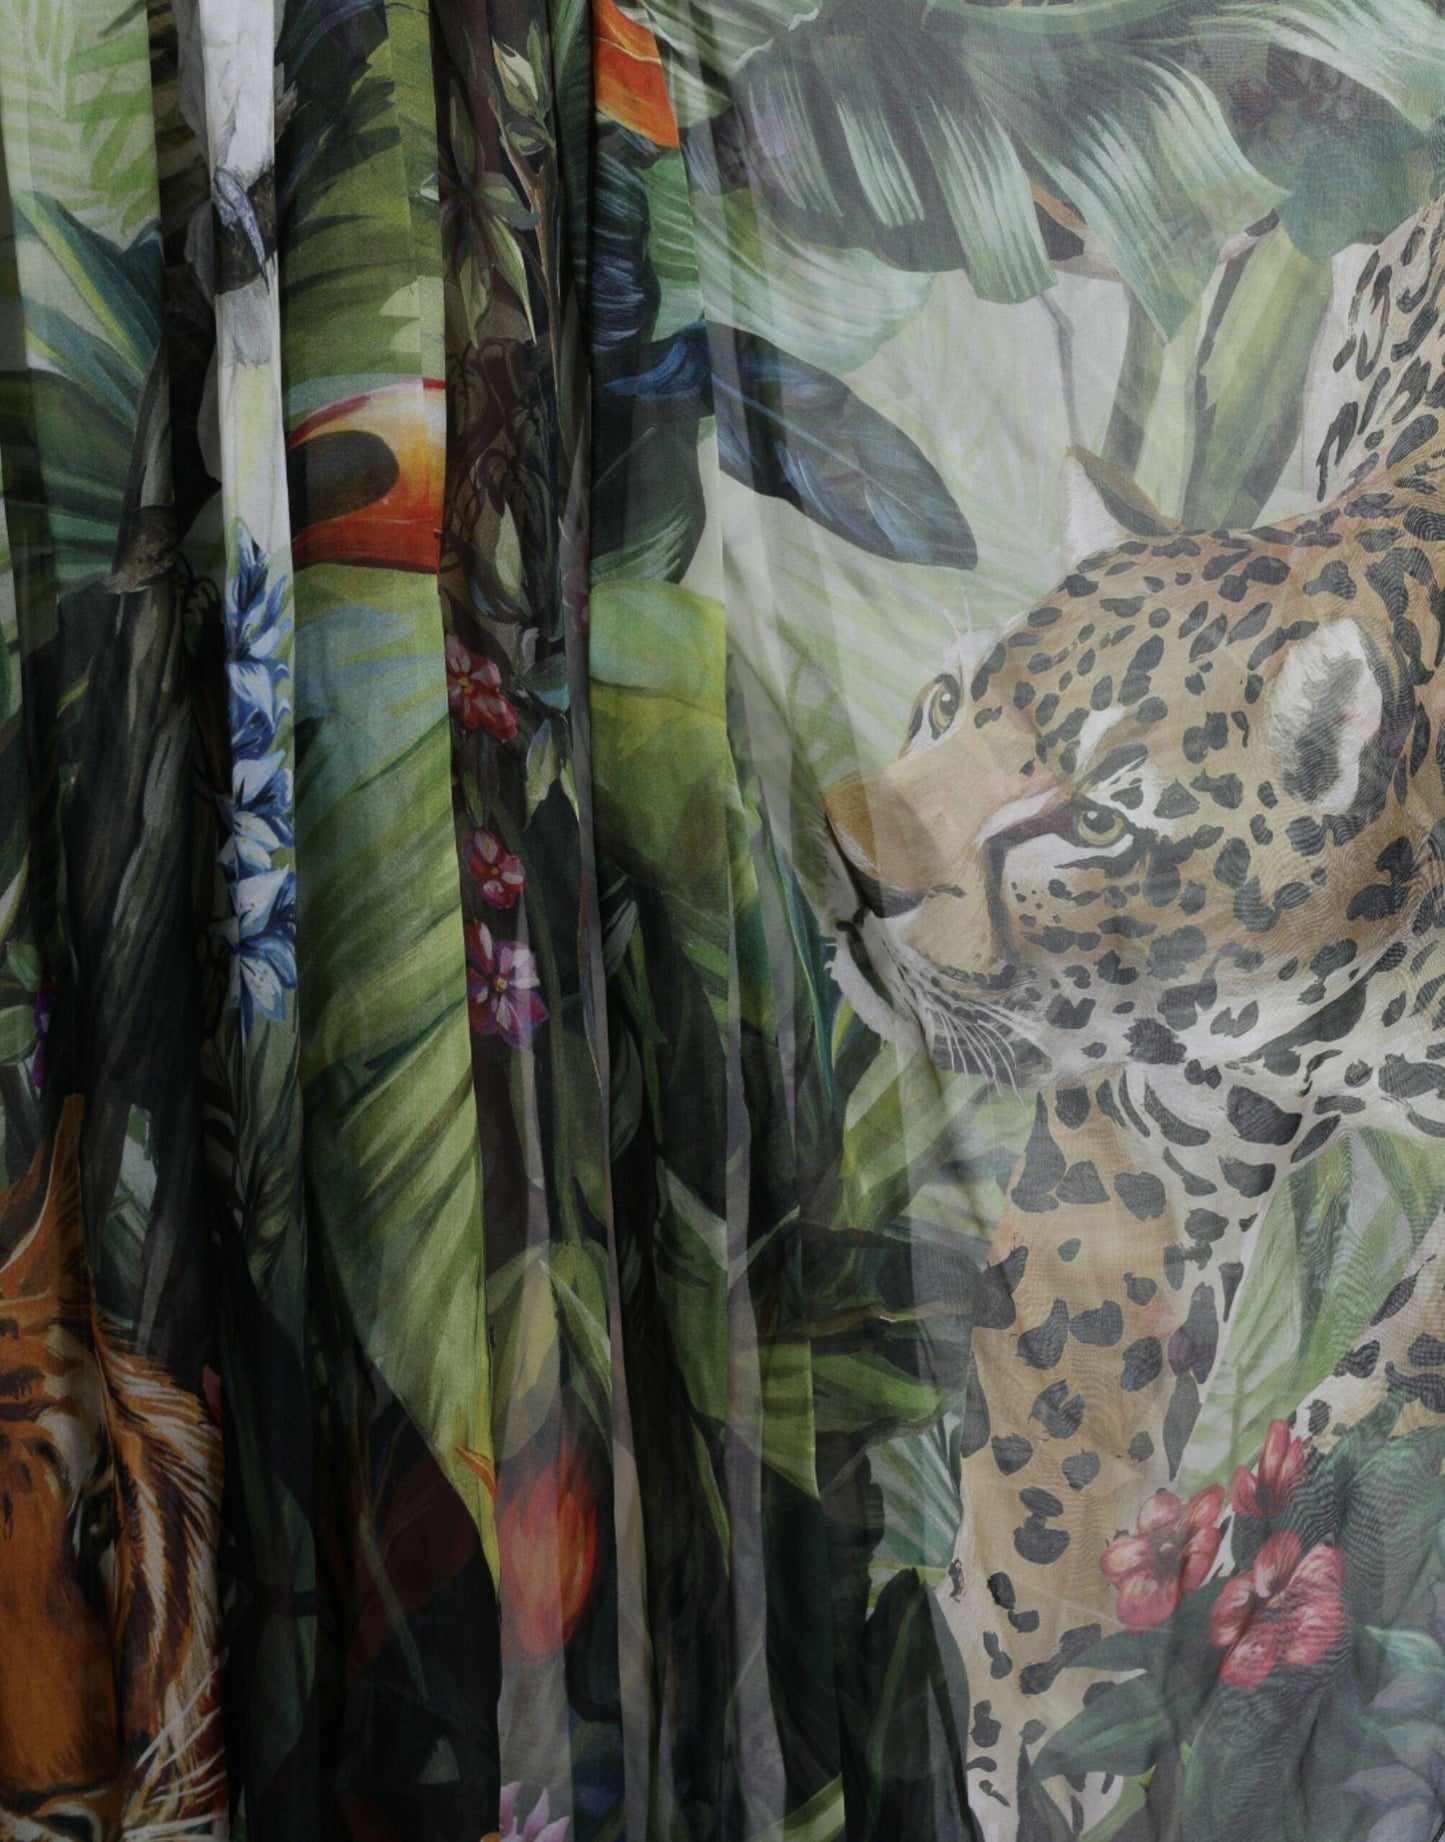 Dolce & Gabbana Elegant Jungle Print Maxi Silk Dress - PER.FASHION